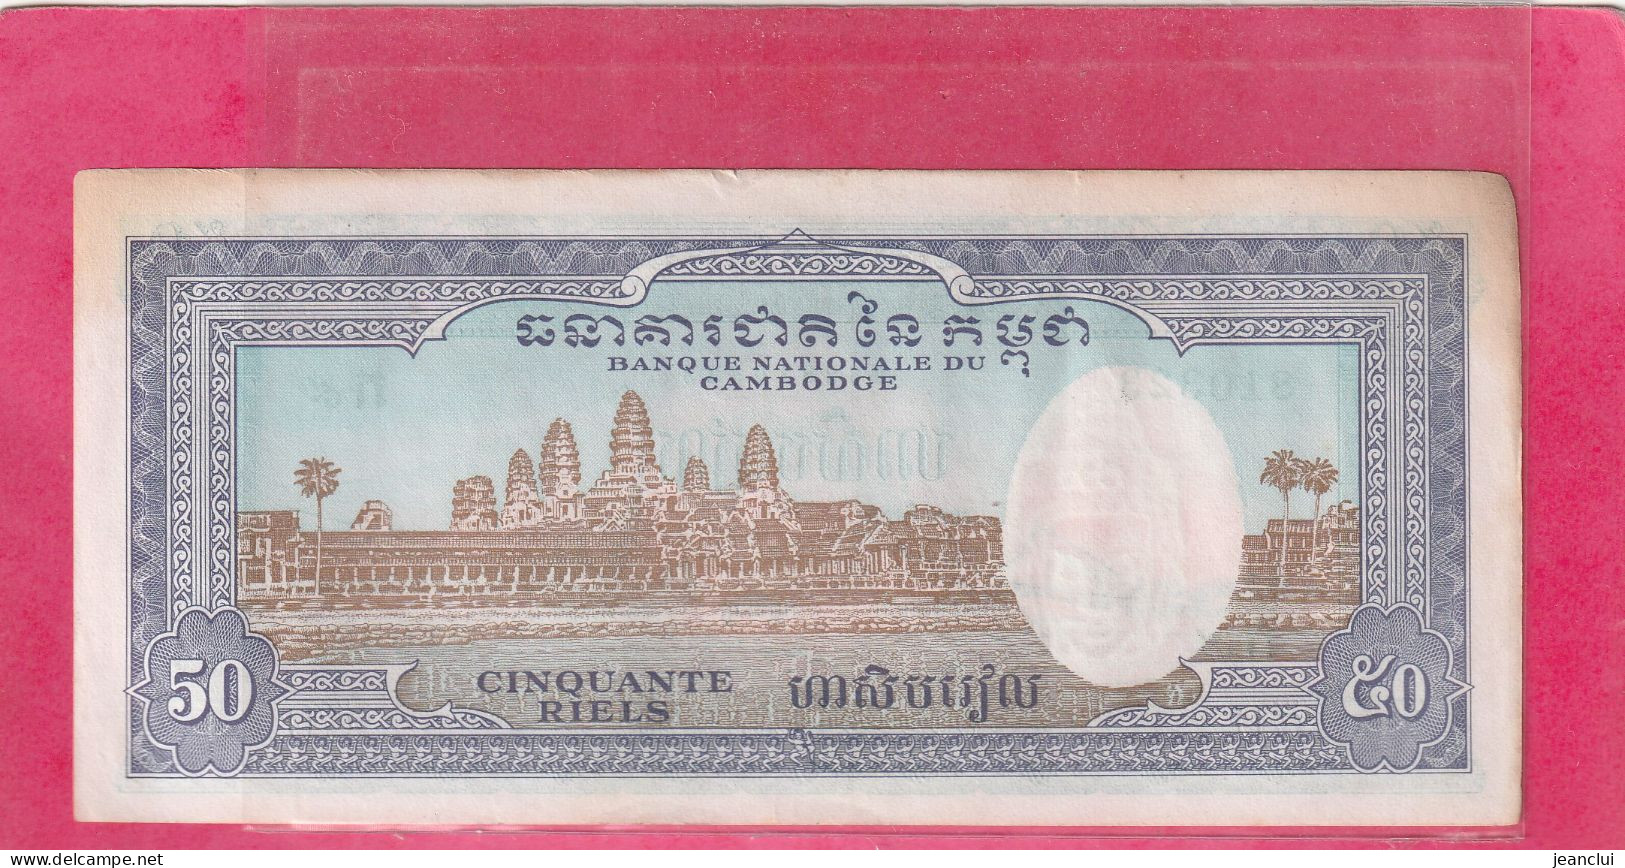 BANQUE NATIONALE DU CAMBODGE  .  50 RIELS    . N°  810323  .  BILLET EN BEL ETAT  .  2 SCANNES - Cambogia